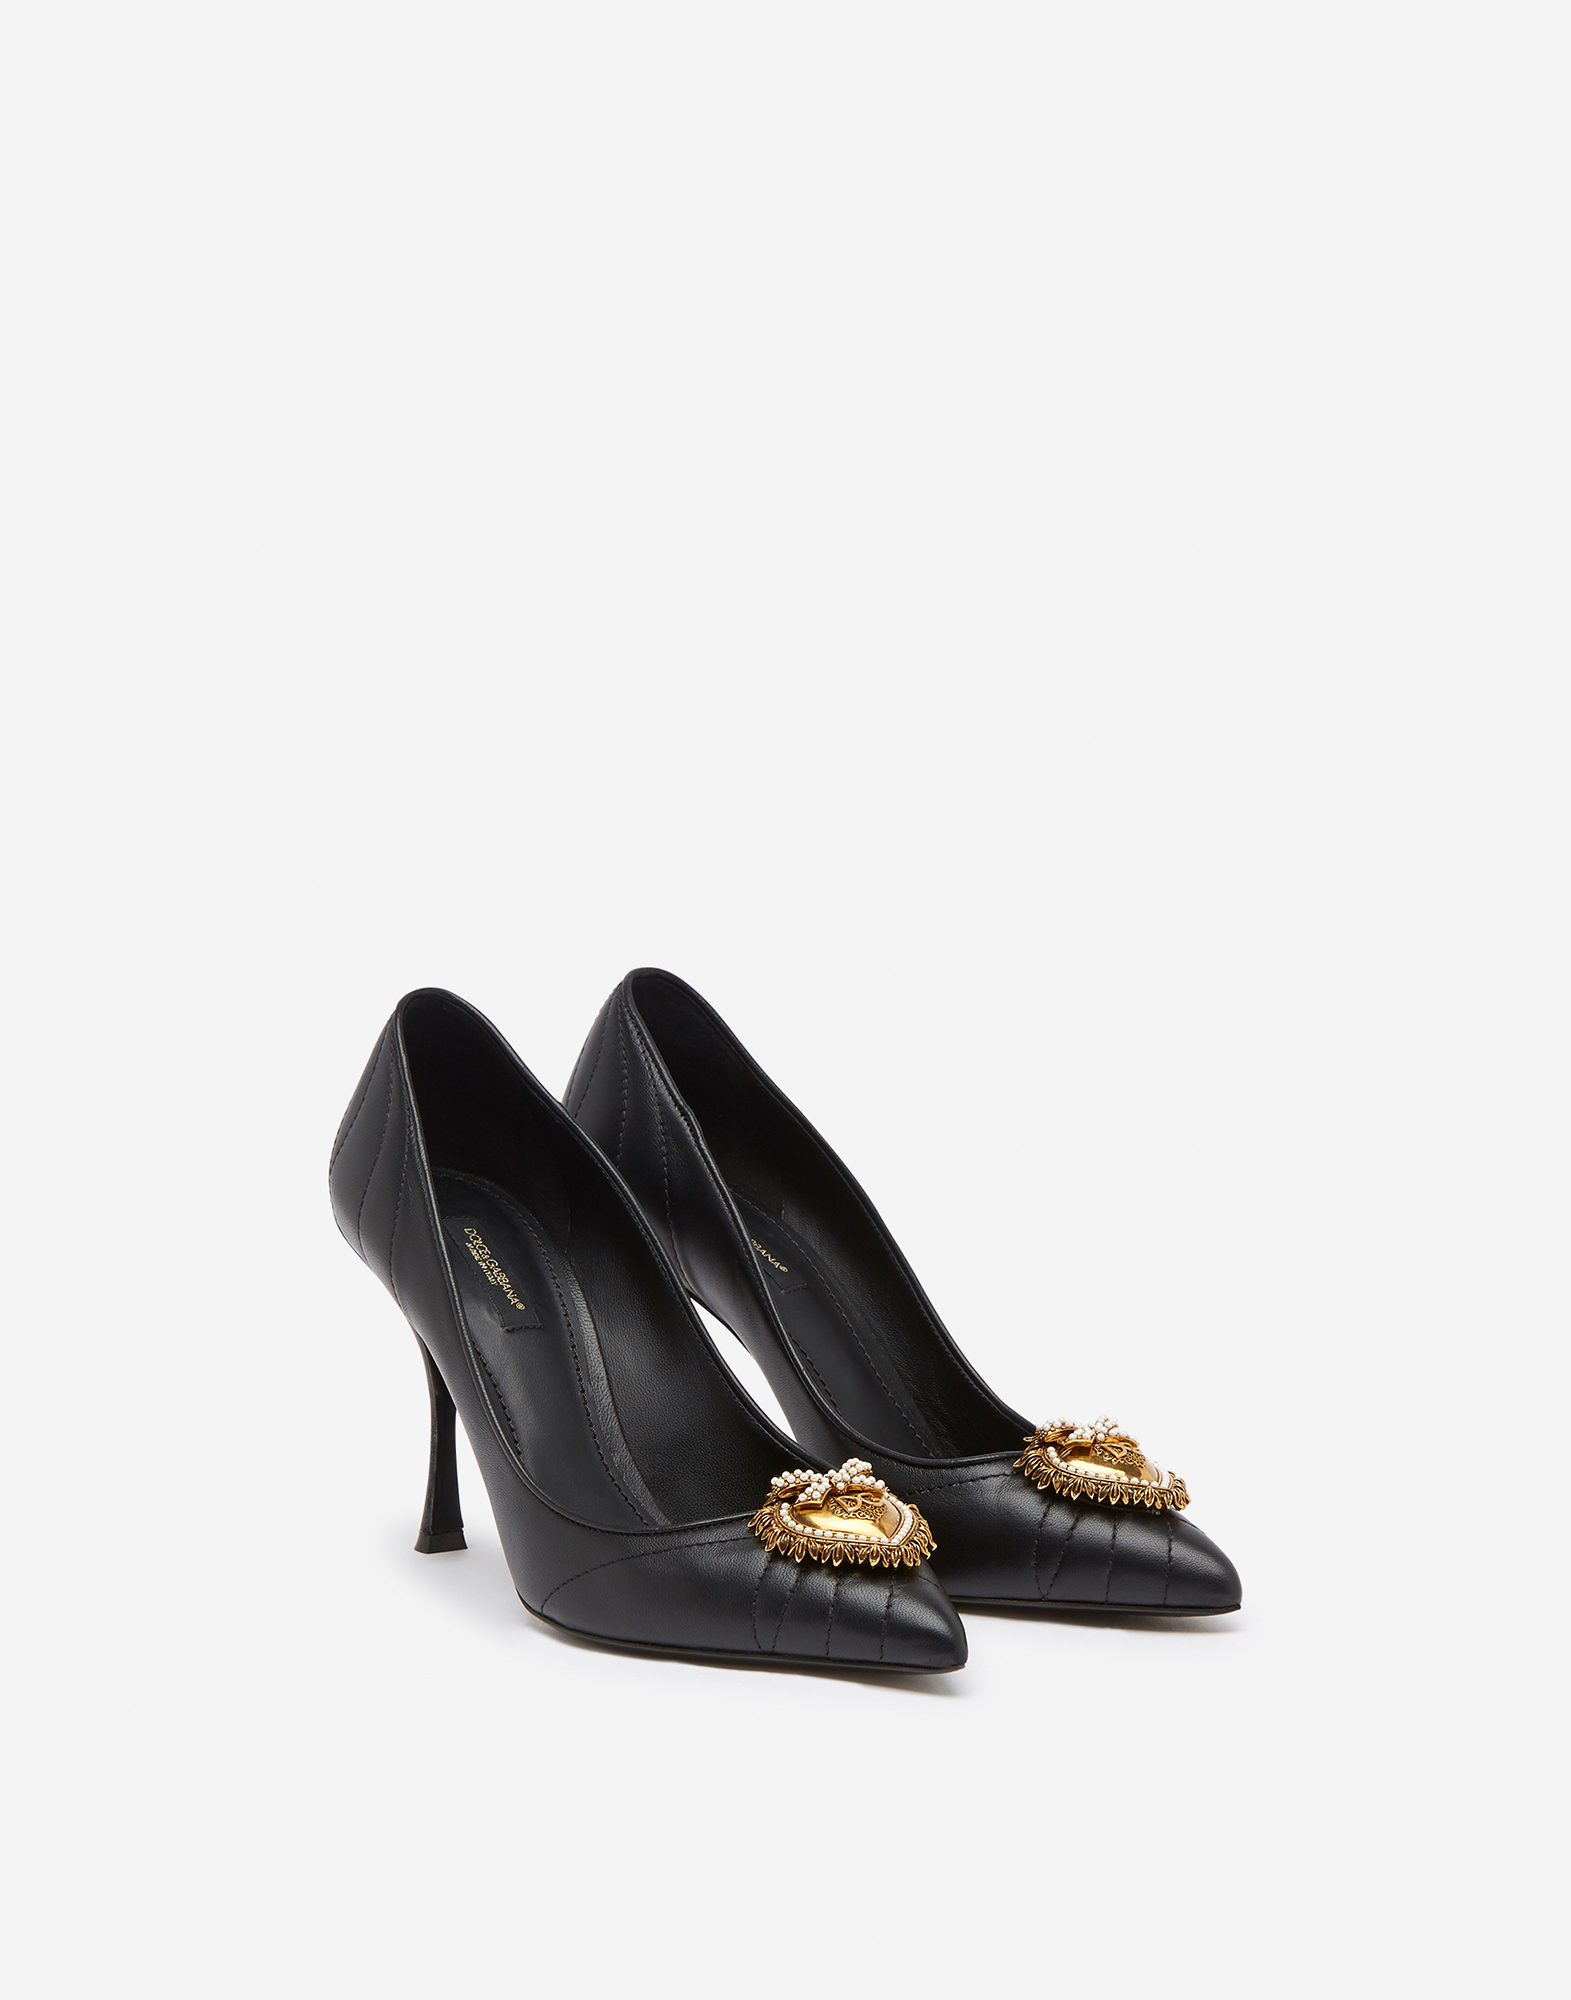 Matelassé nappa leather Devotion pumps in Black for Women | Dolce&Gabbana®